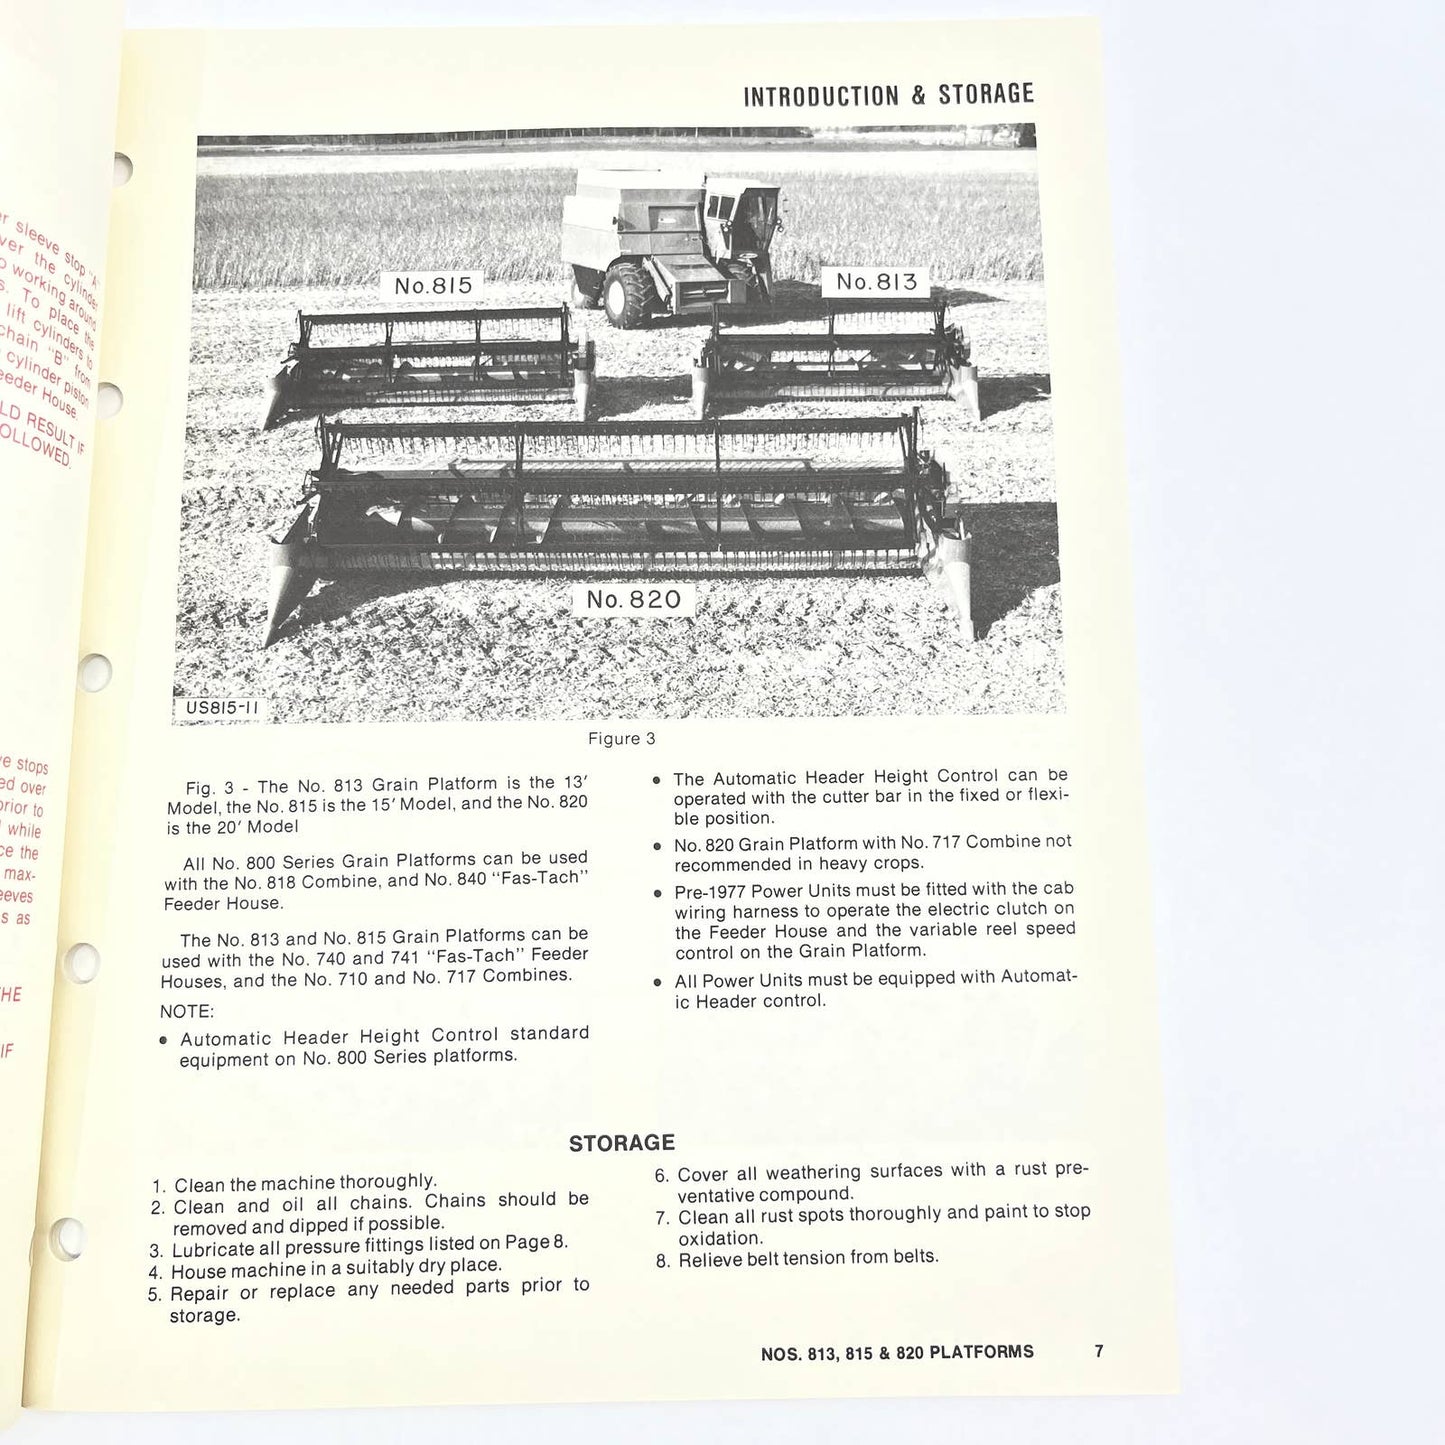 Original 1981 New Idea Manual 813 815 820 UNI-FAS-TACH Platforms US-218 TB9